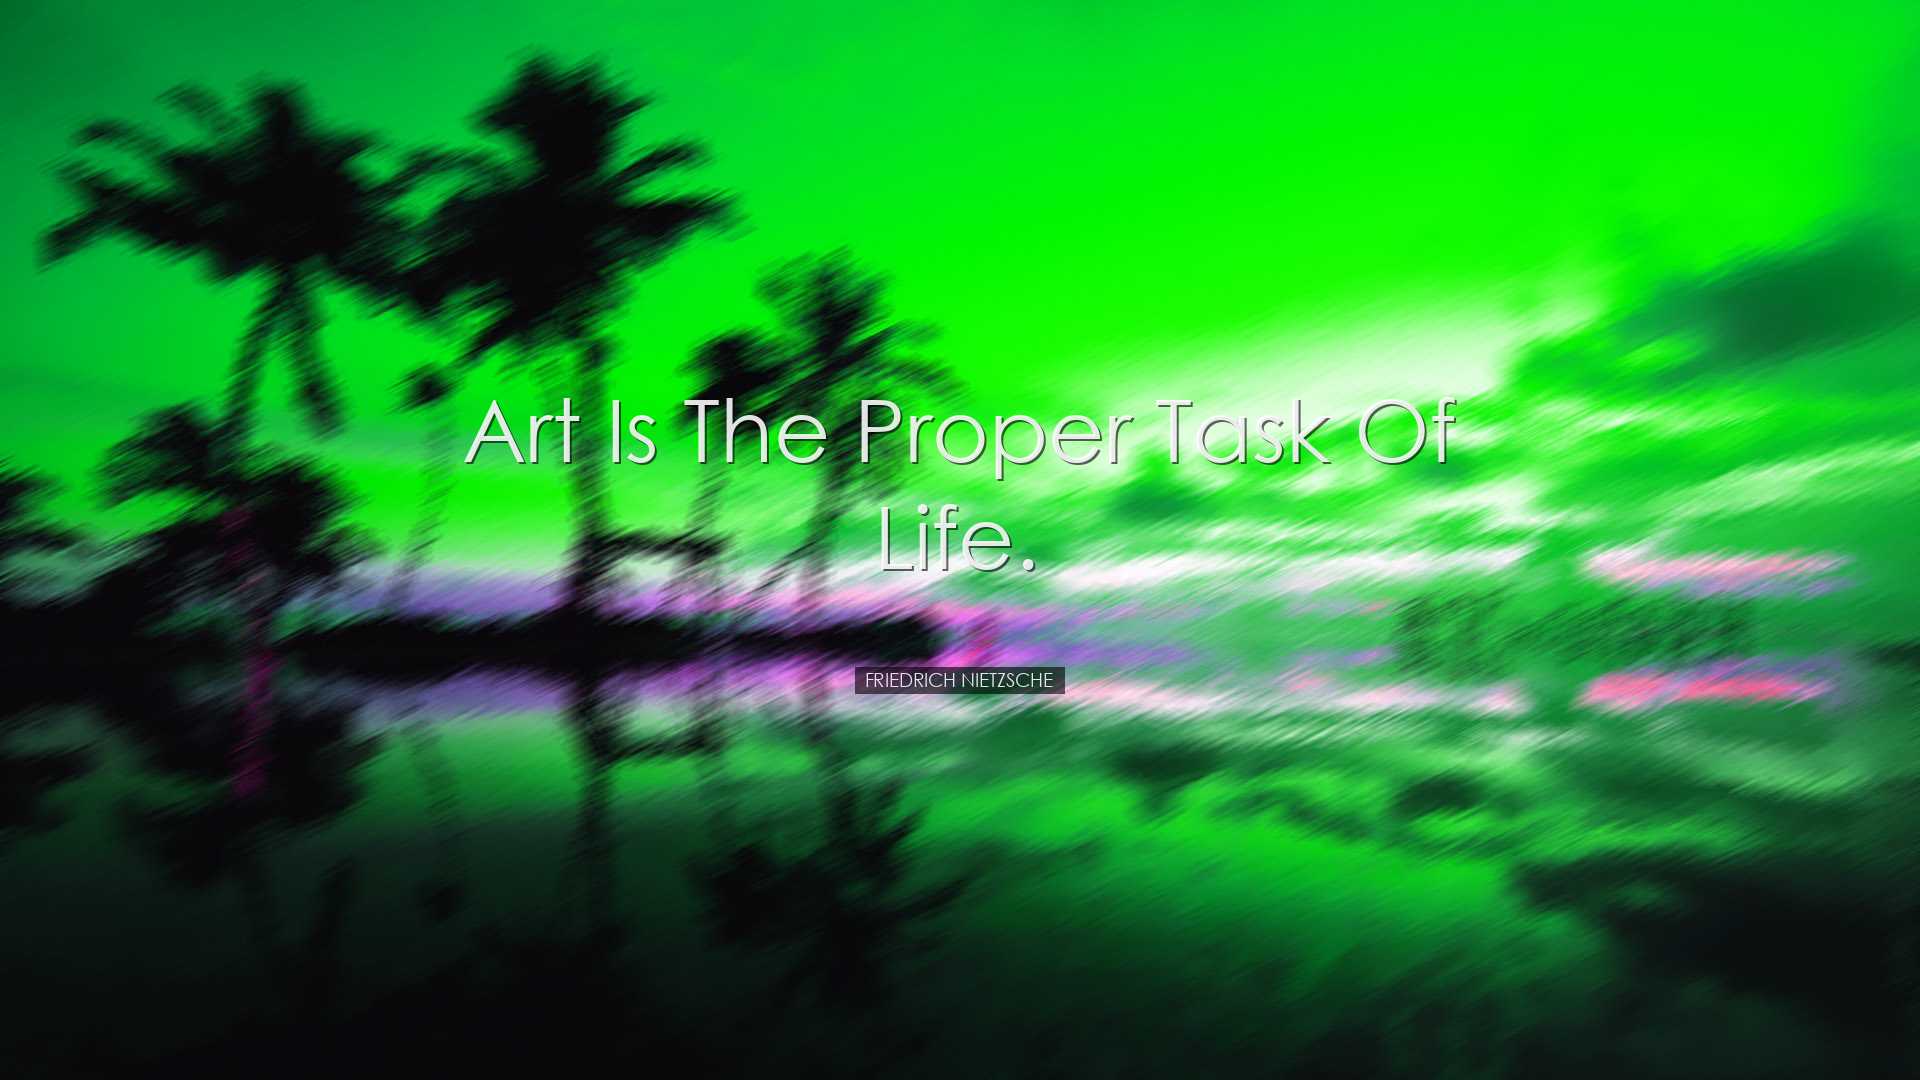 Art is the proper task of life. - Friedrich Nietzsche